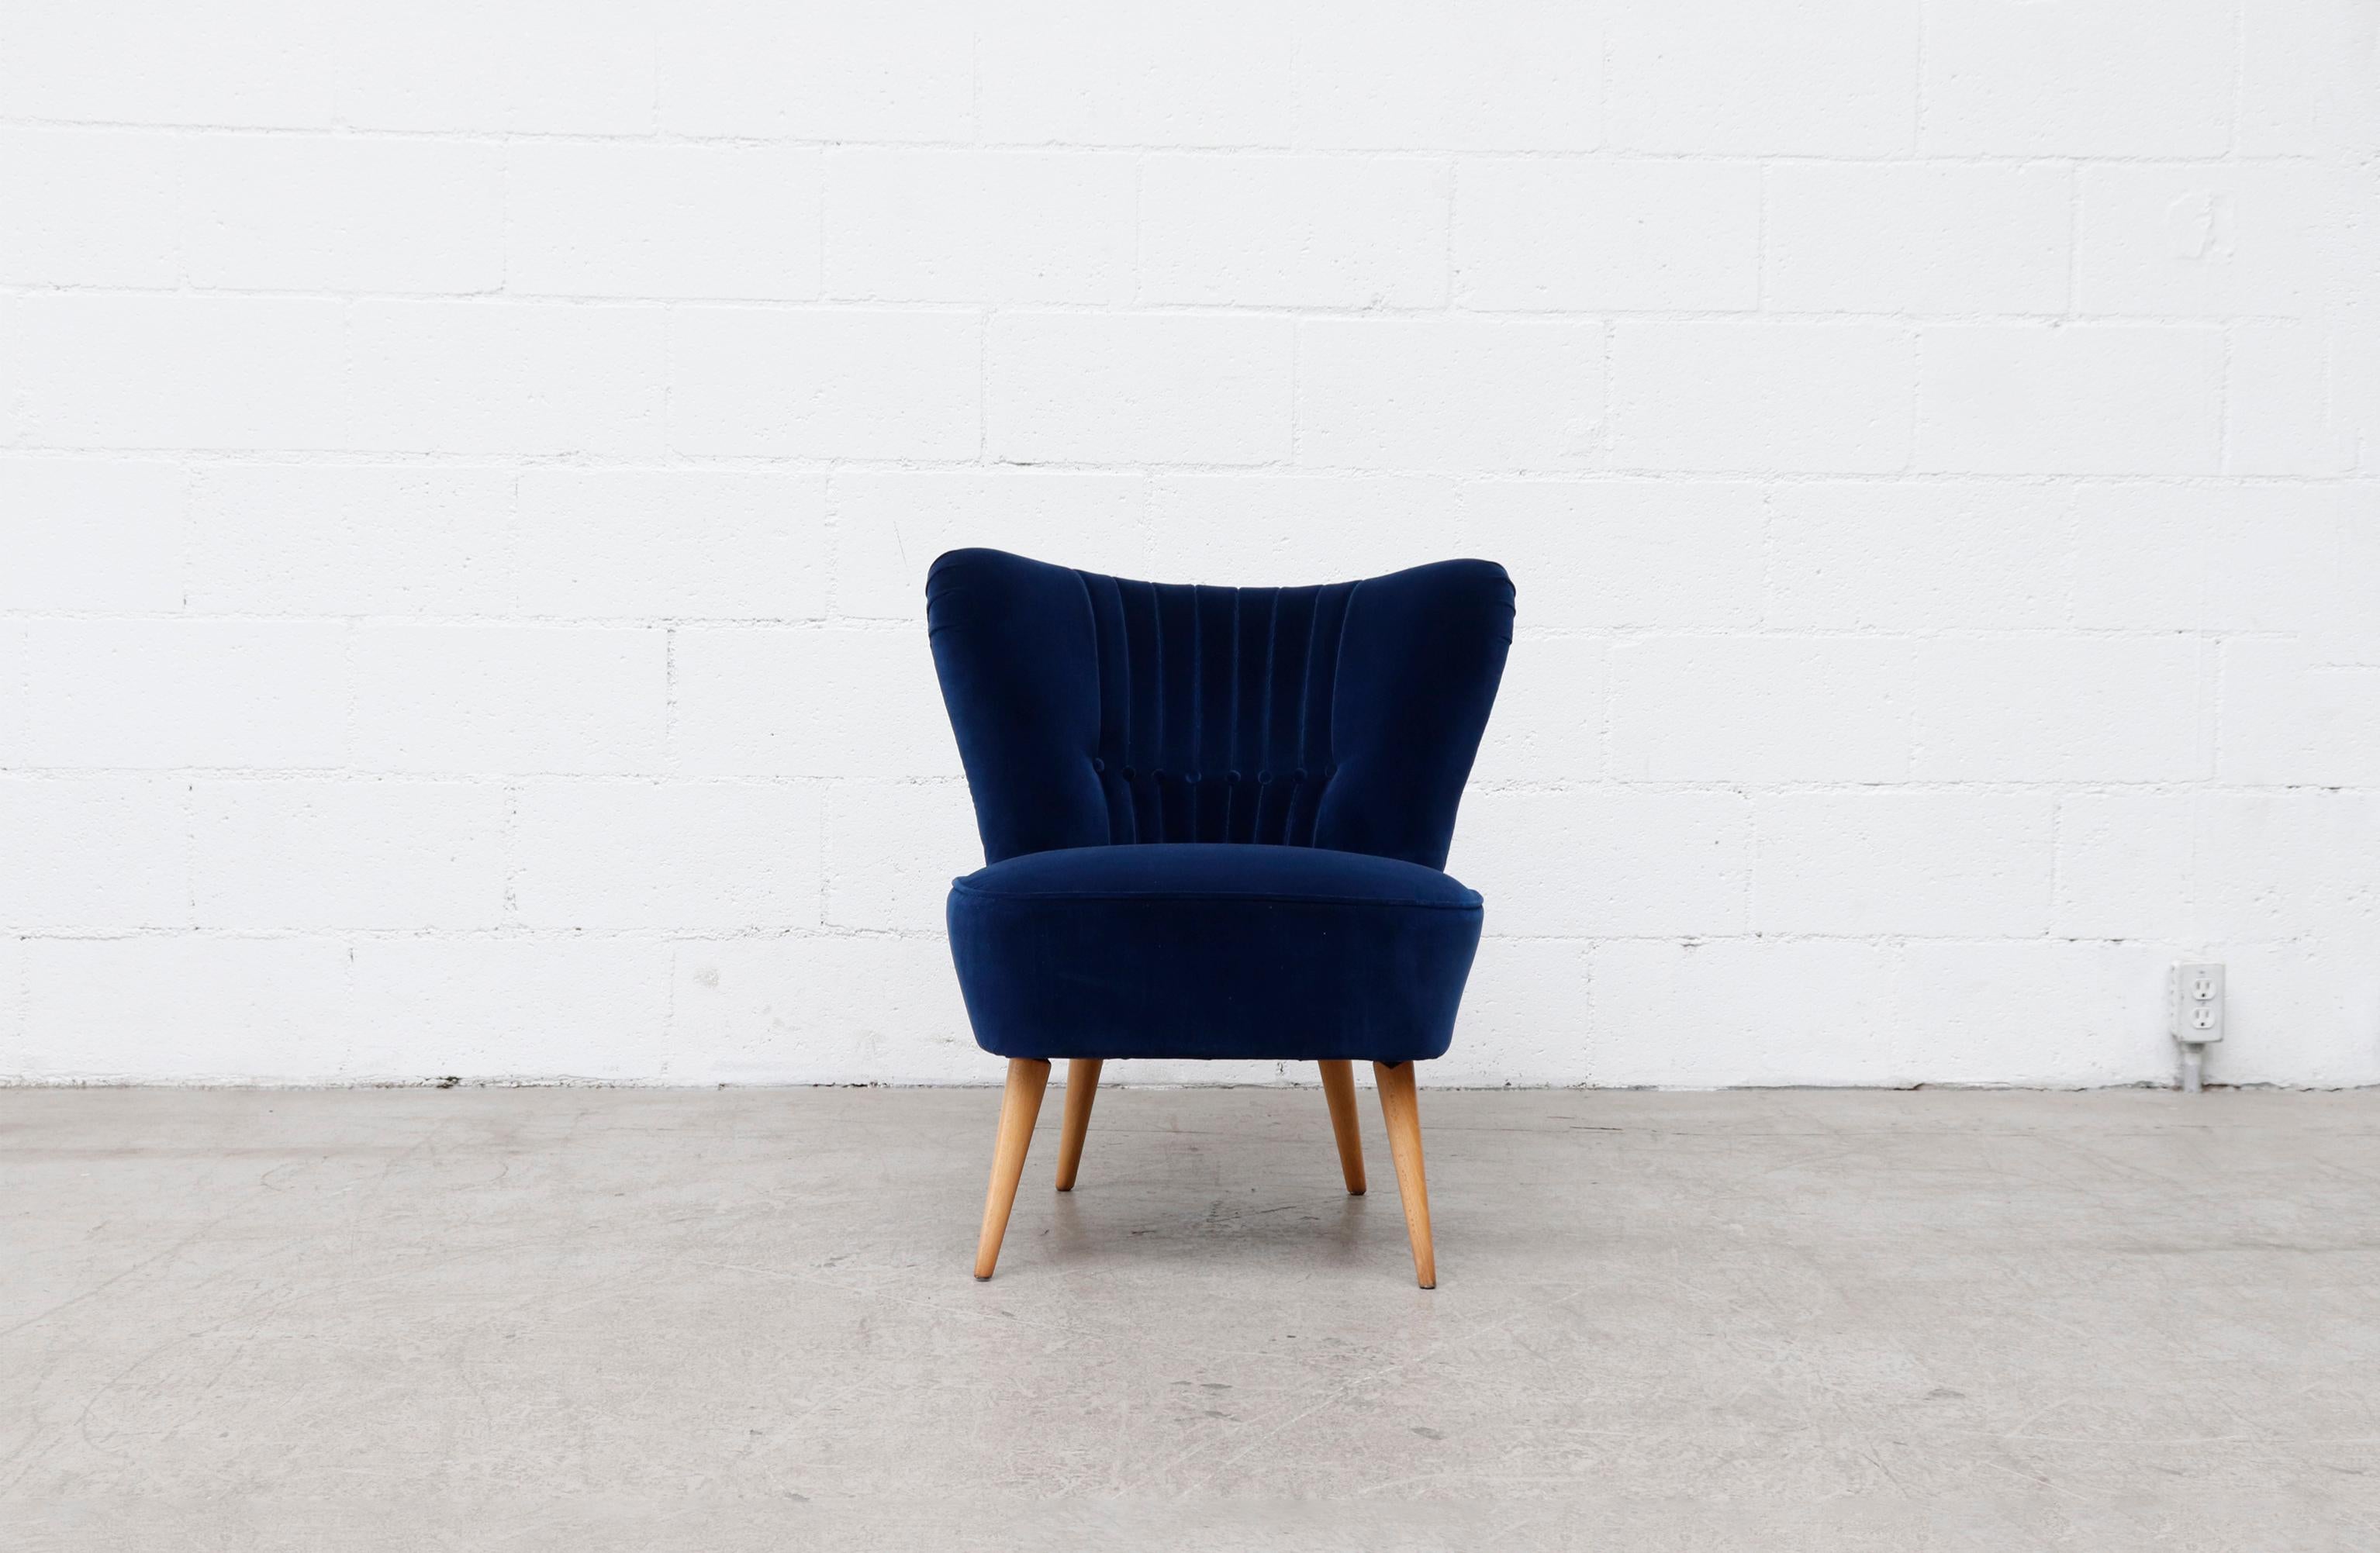 cobalt blue chairs